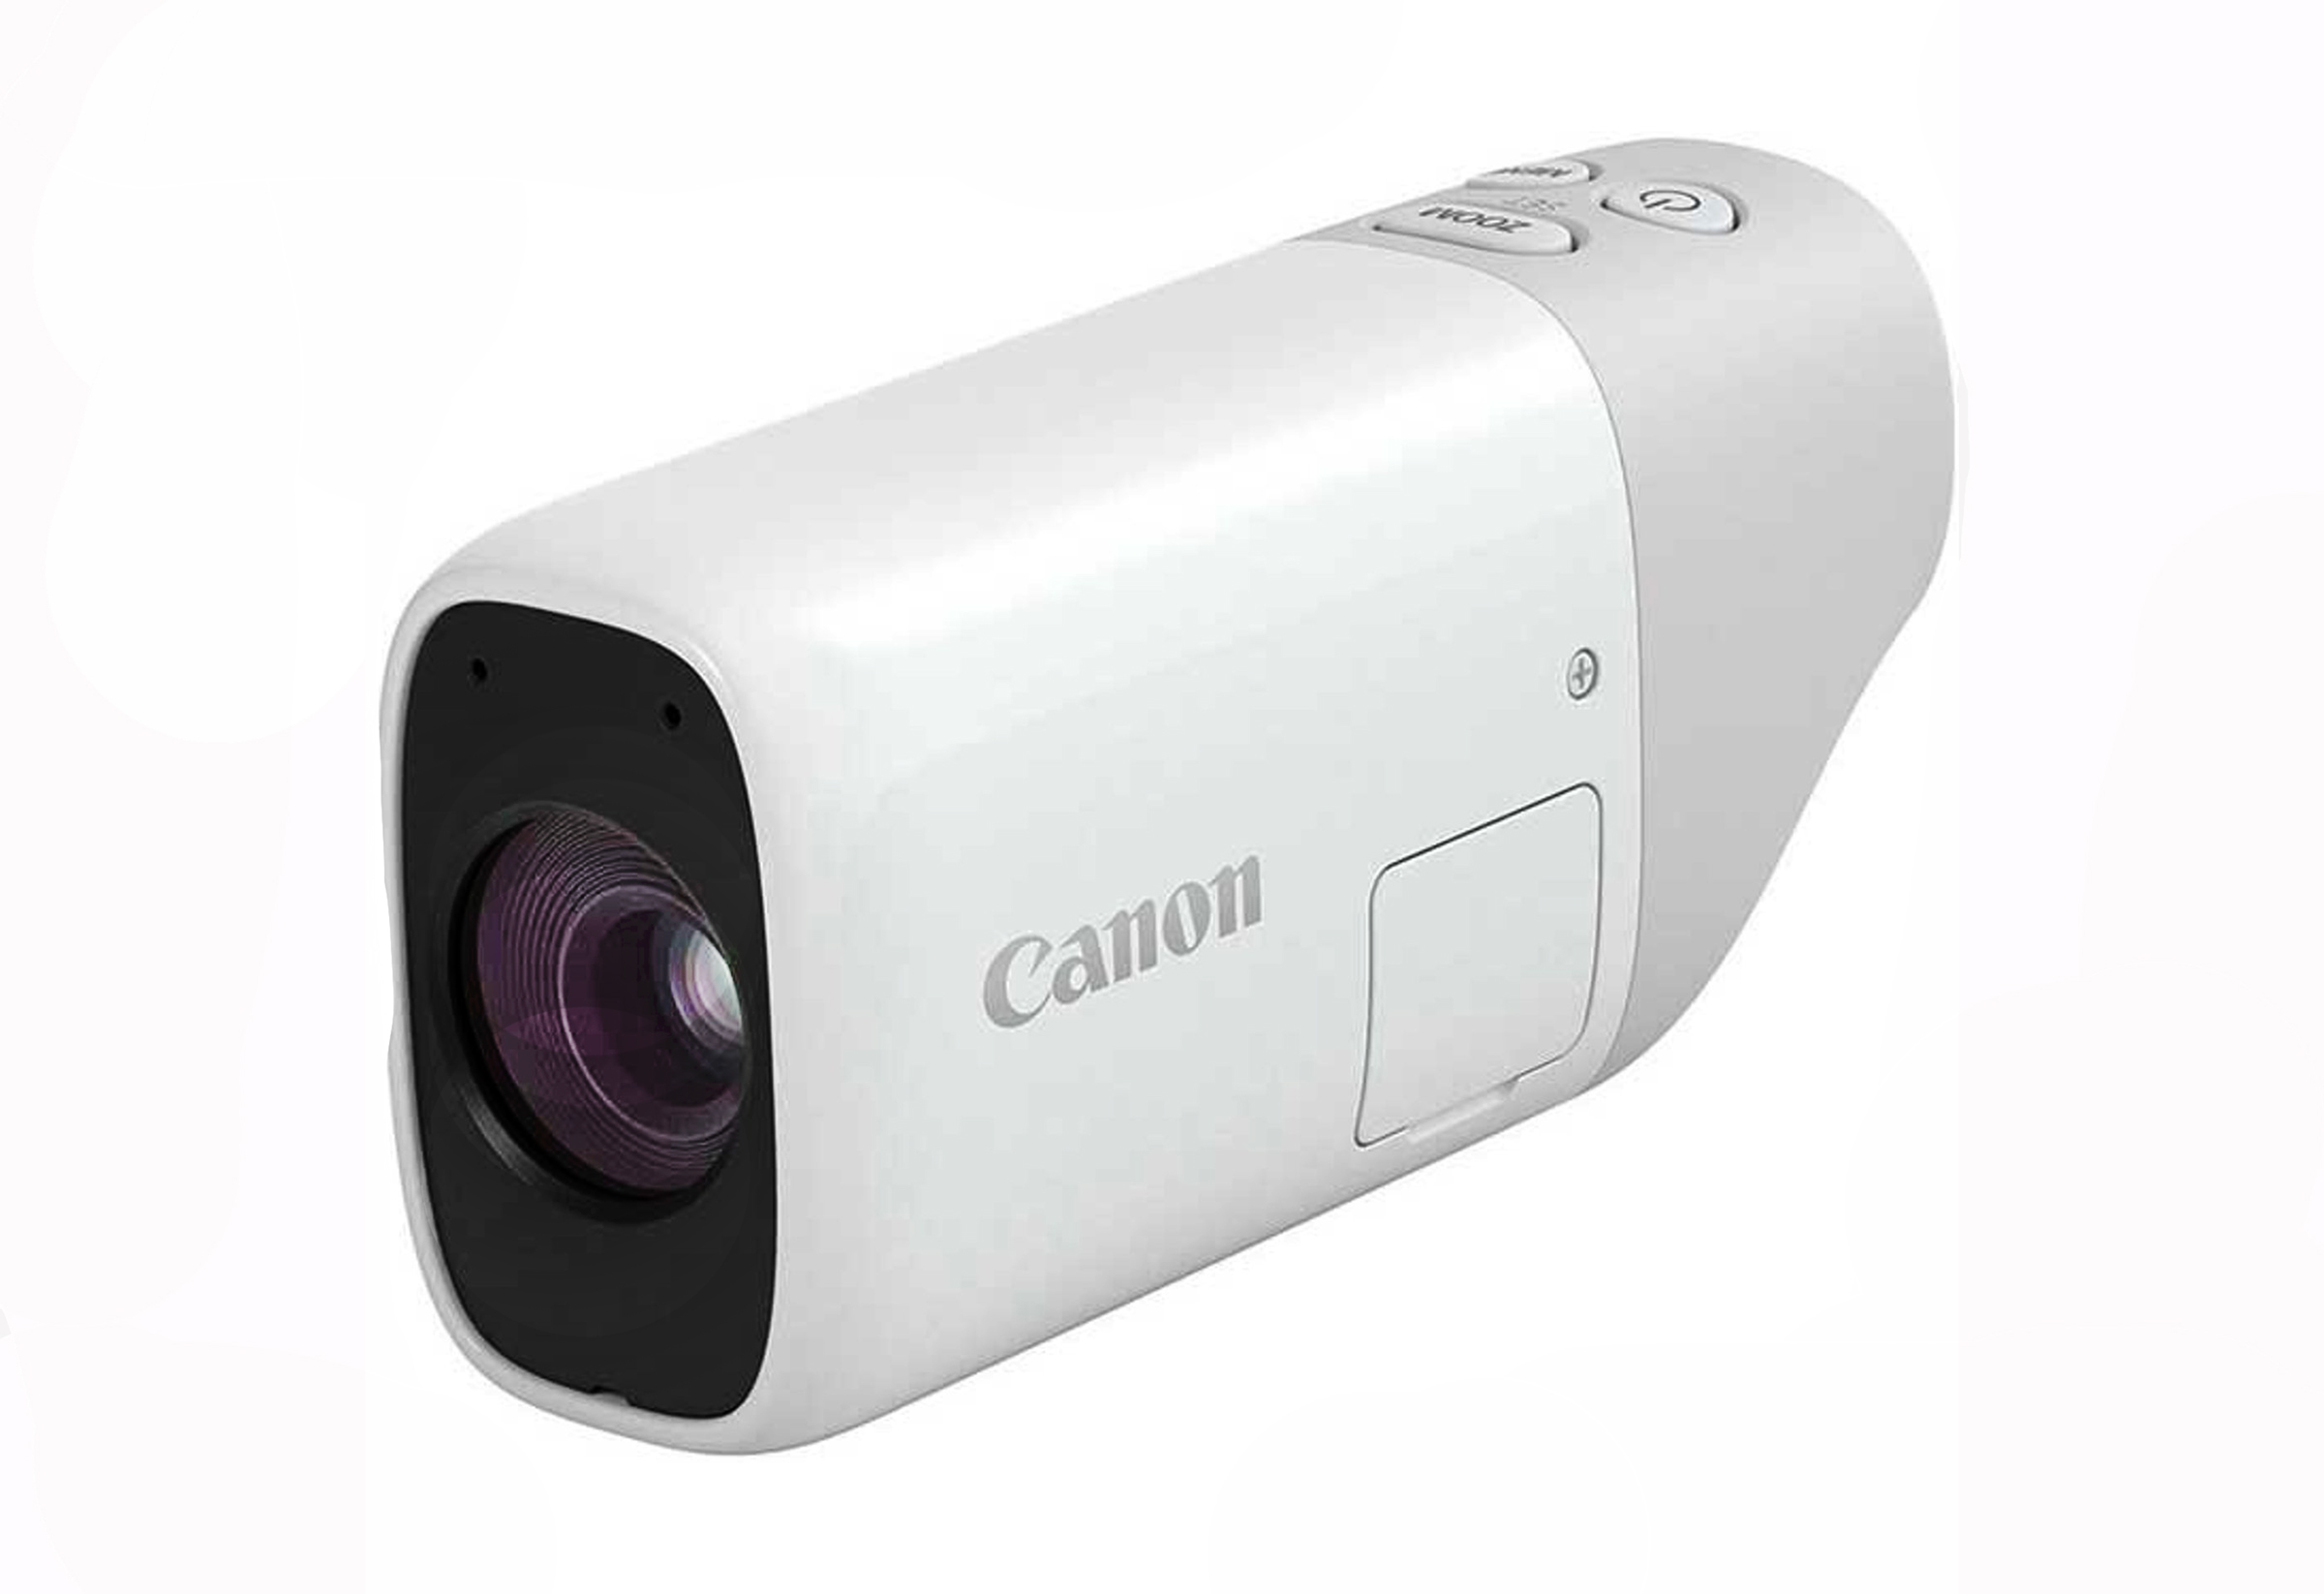 Canon Powershot monocular camera